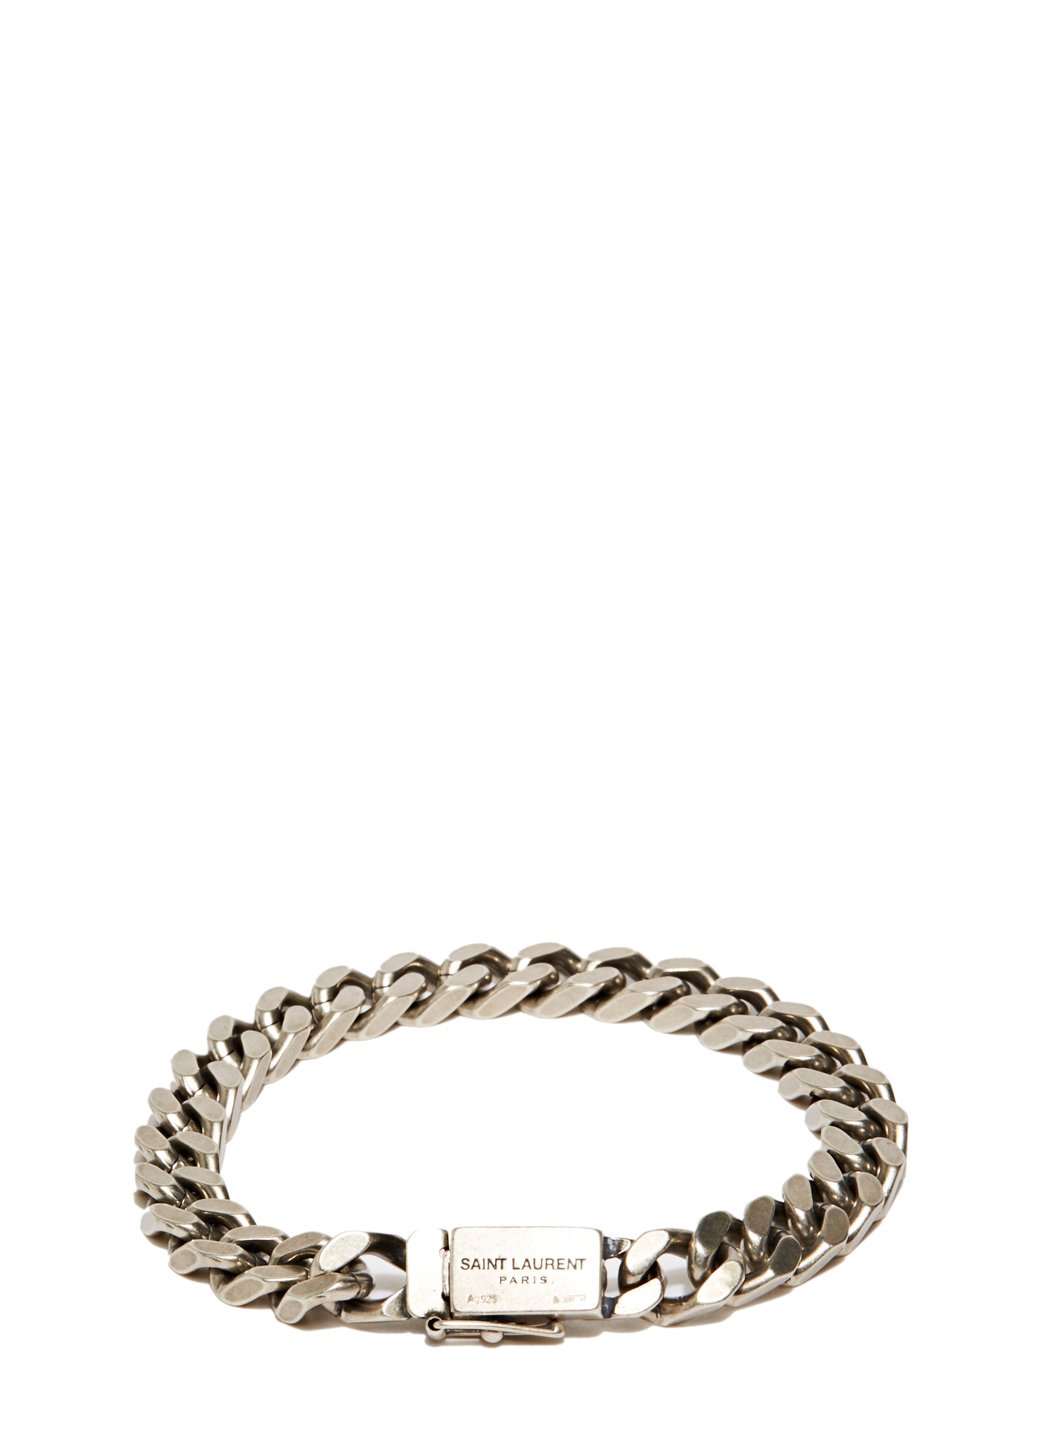 Lyst - Saint Laurent Gourmette Silver Chain Bracelet in Metallic for Men